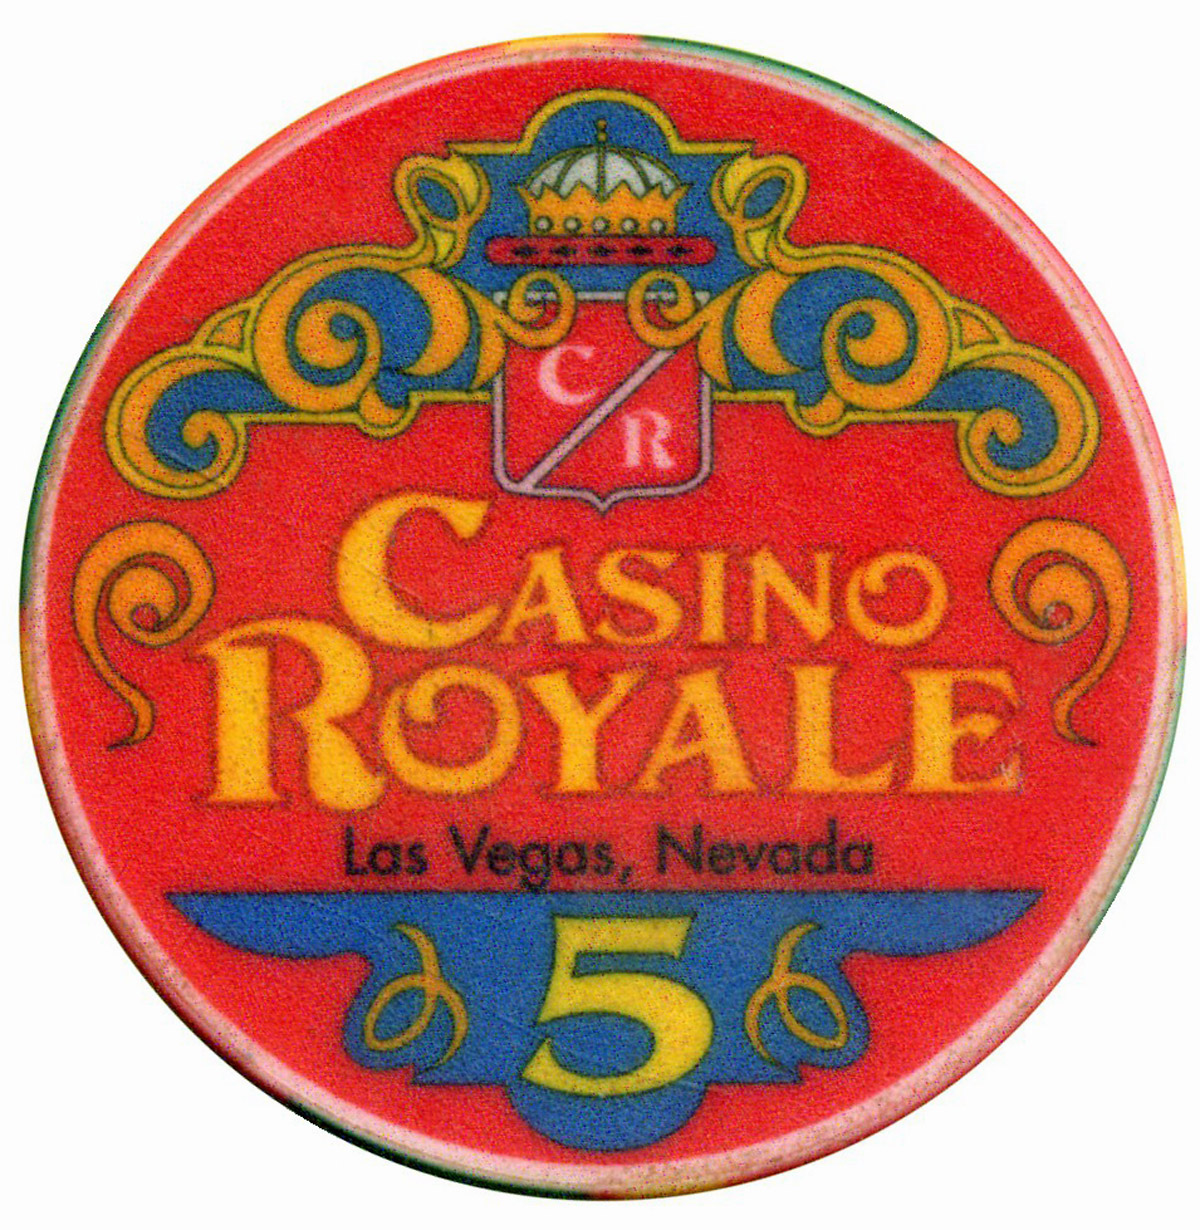 500 dollar casino chip casino royale